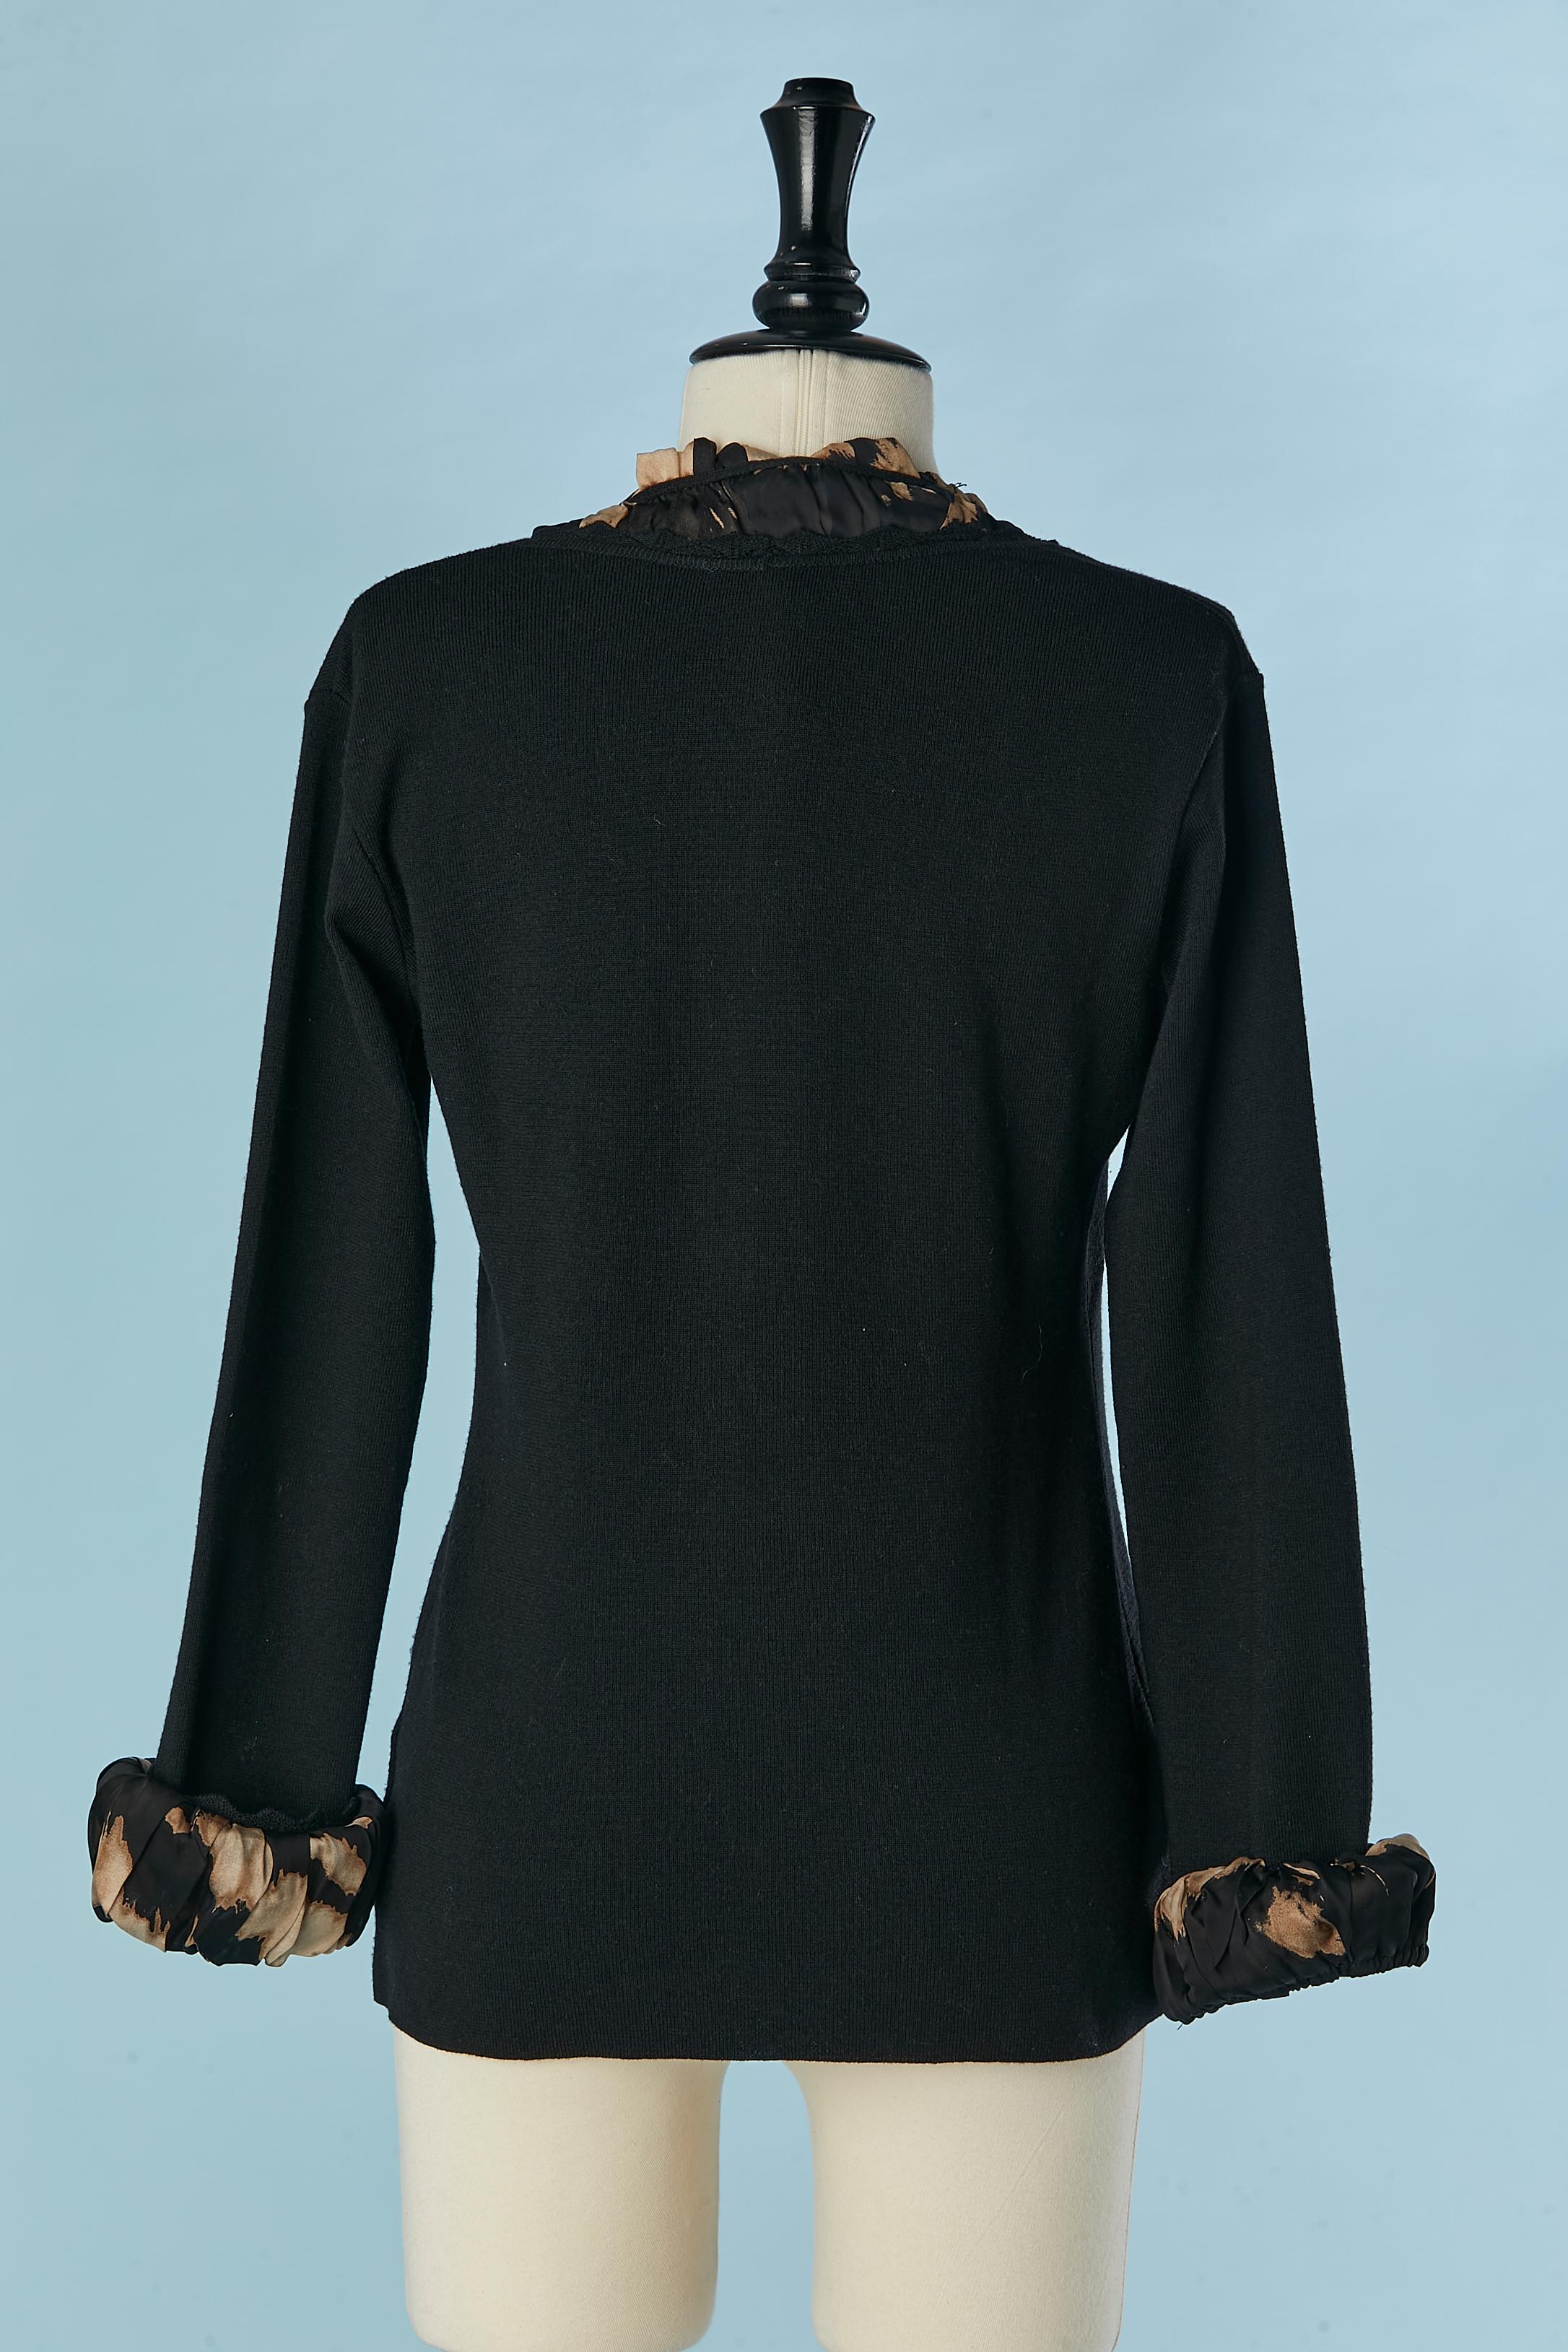 Black sweater with leopard silk chiffon neckline and cuffs Roberto Cavalli  For Sale 1